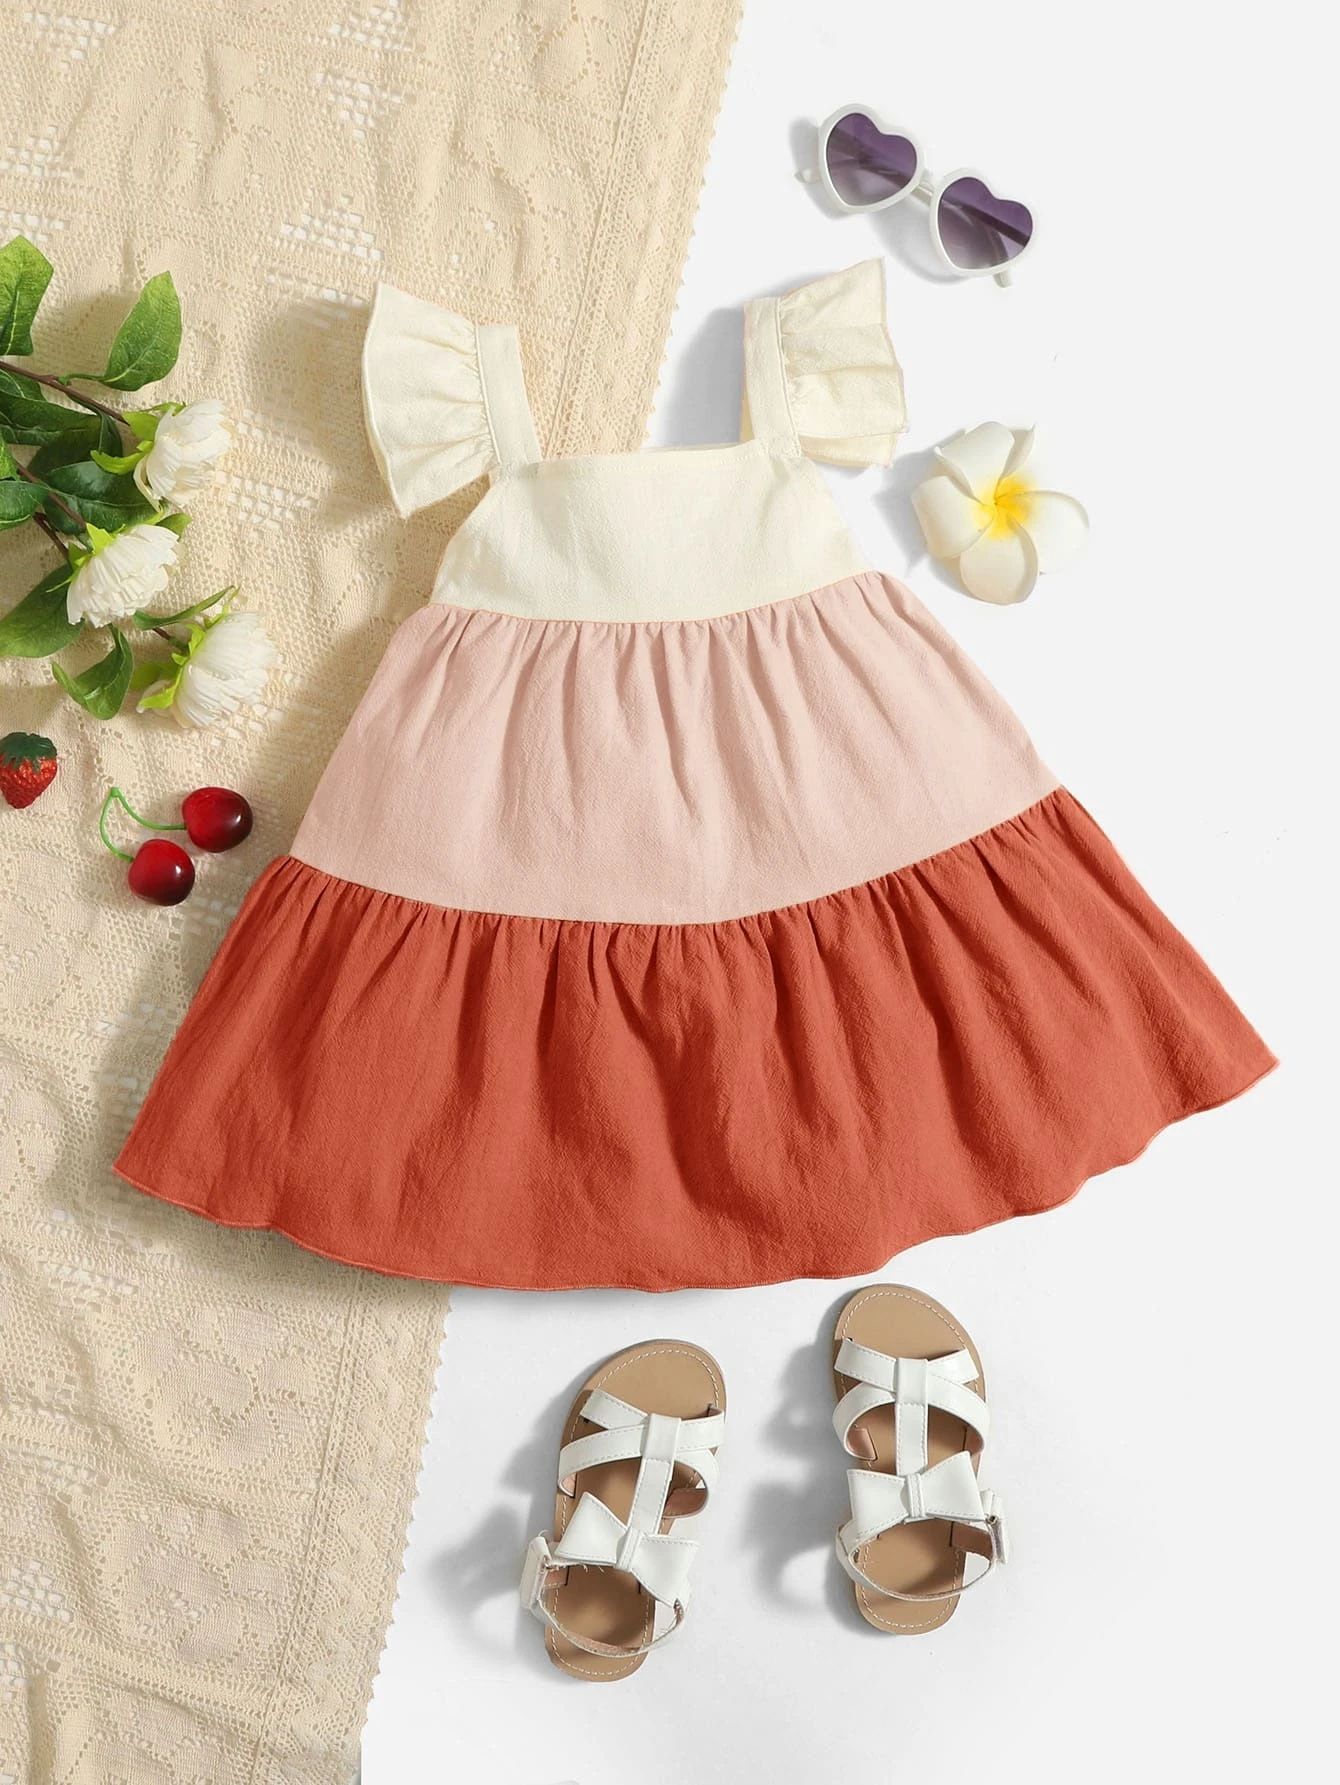 SHEIN Baby Color Block Ruffle Trim Dress SKU: sa2202231310399922(500+ Reviews)Cotton$6.00$5.70Joi... | SHEIN